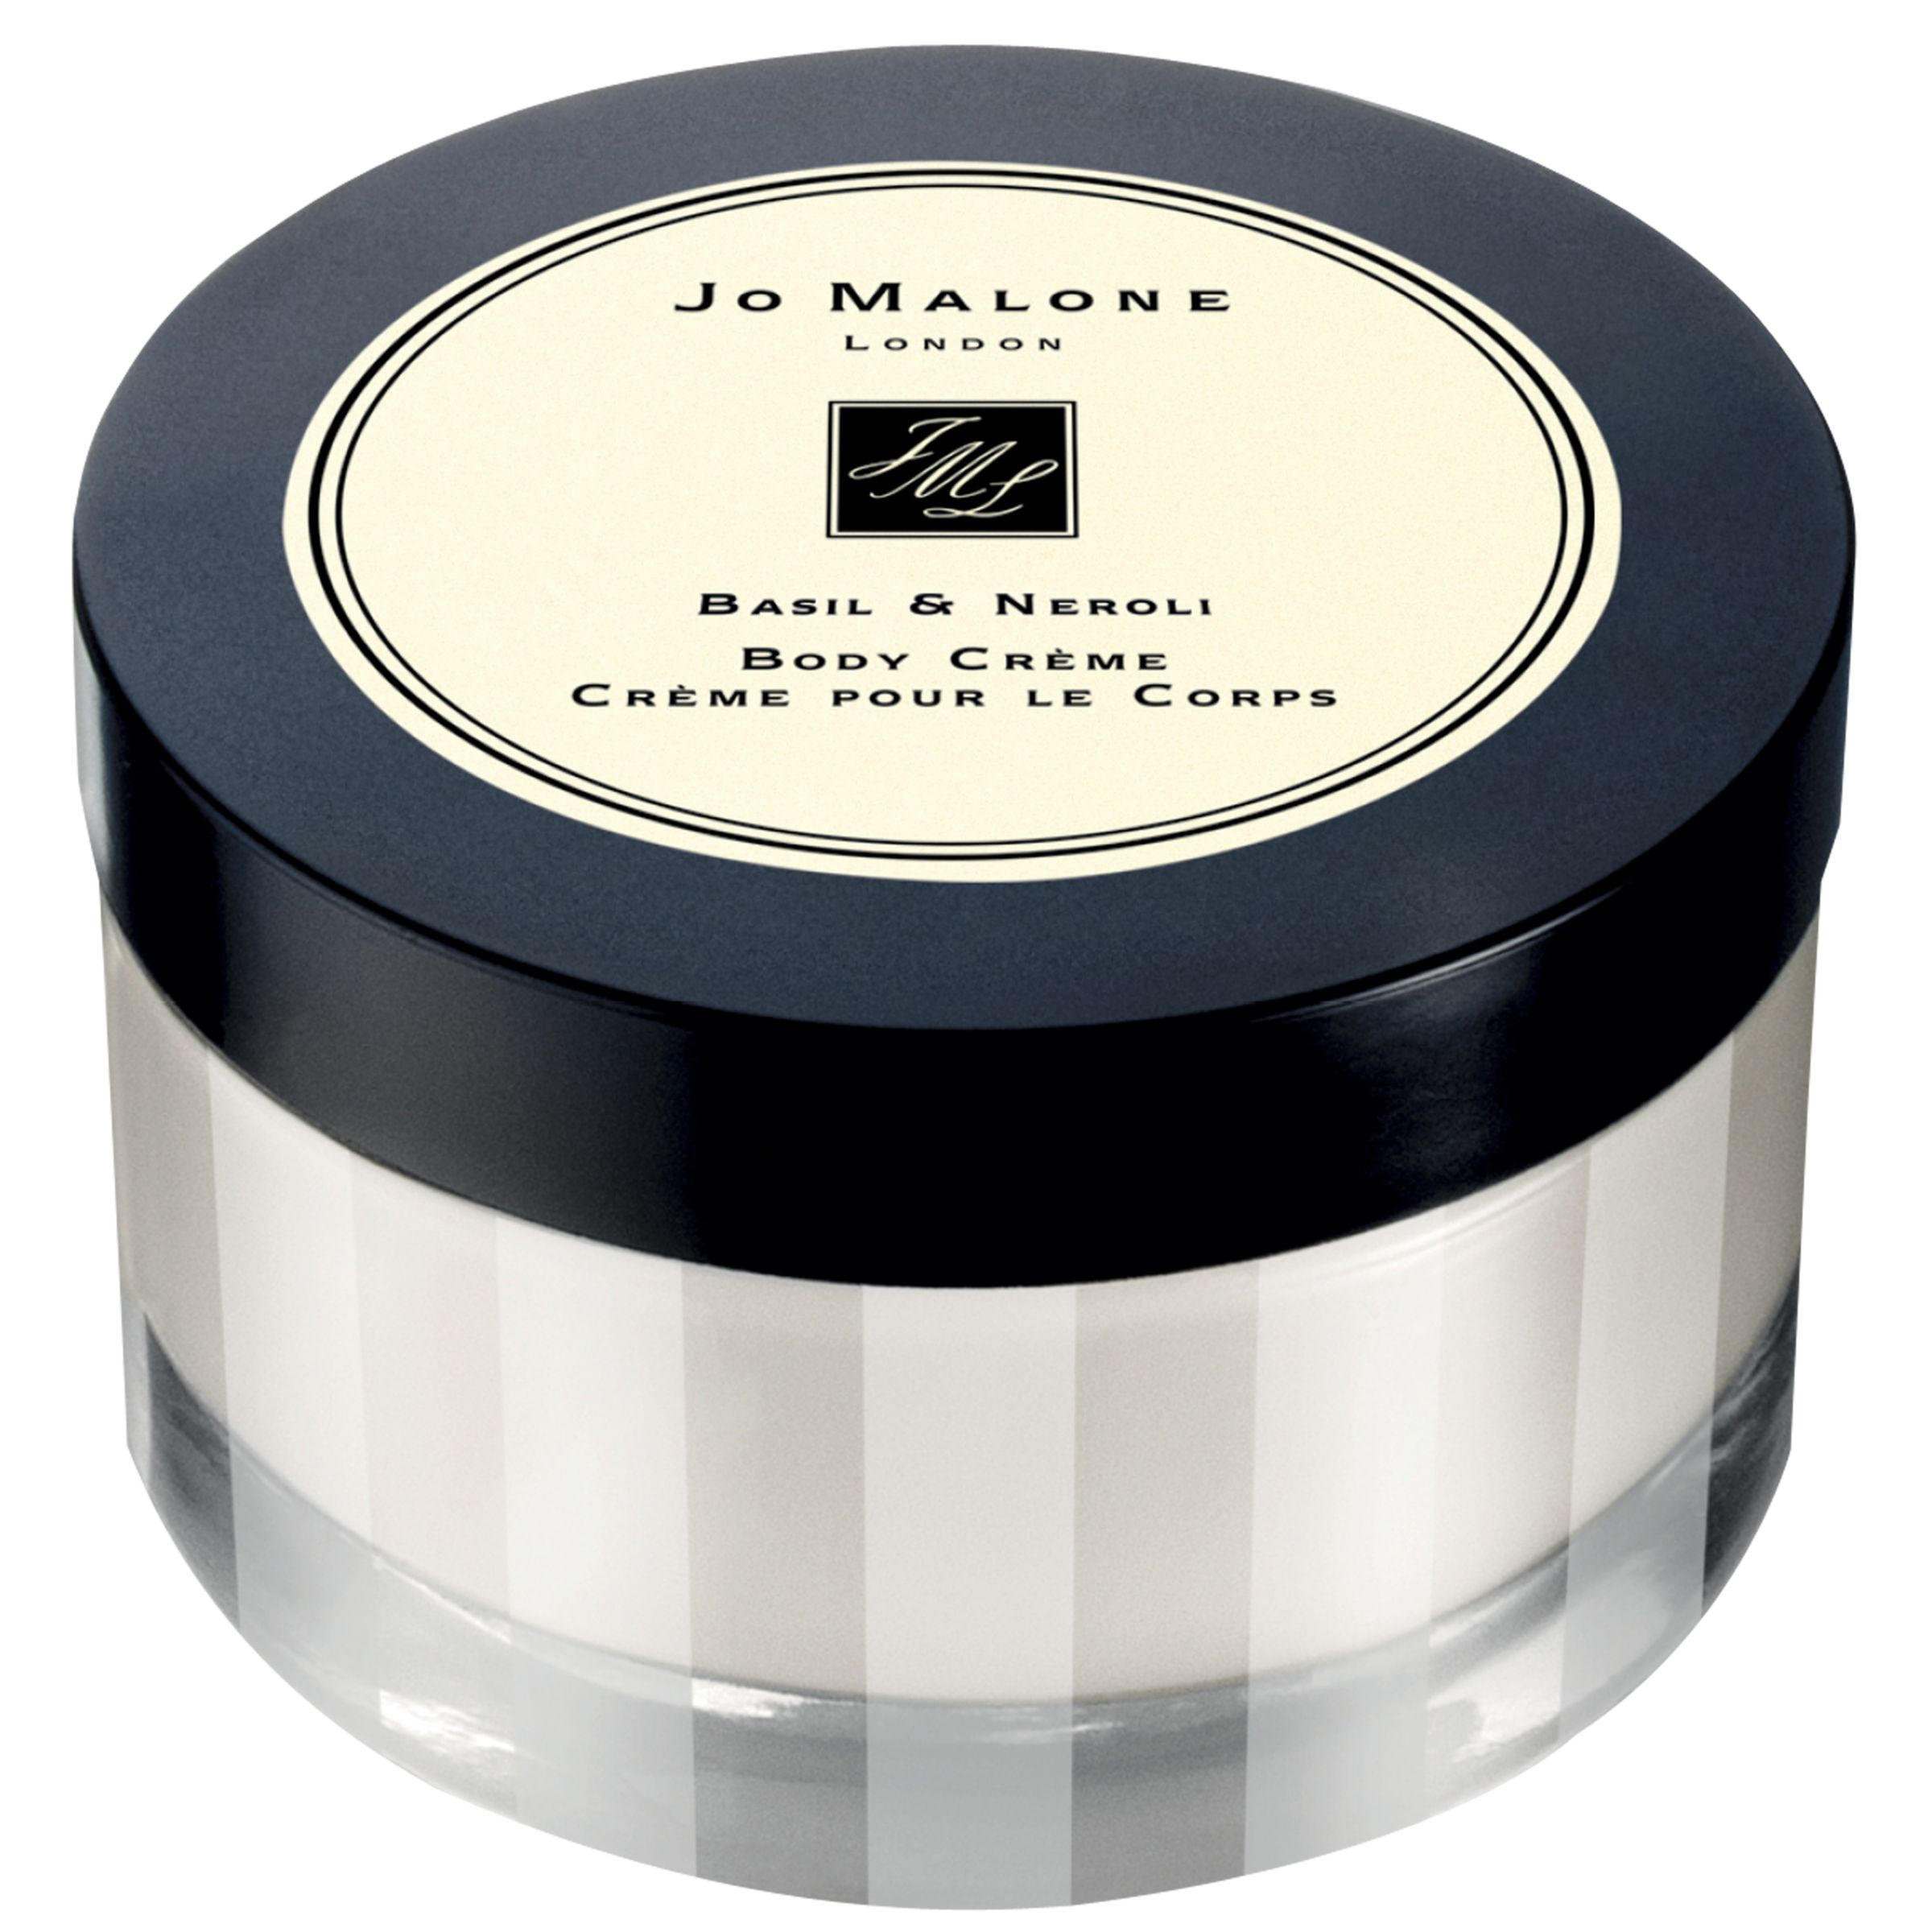 Jo Malone London Basil & Neroli Body Crème, 175ml at John Lewis & Partners